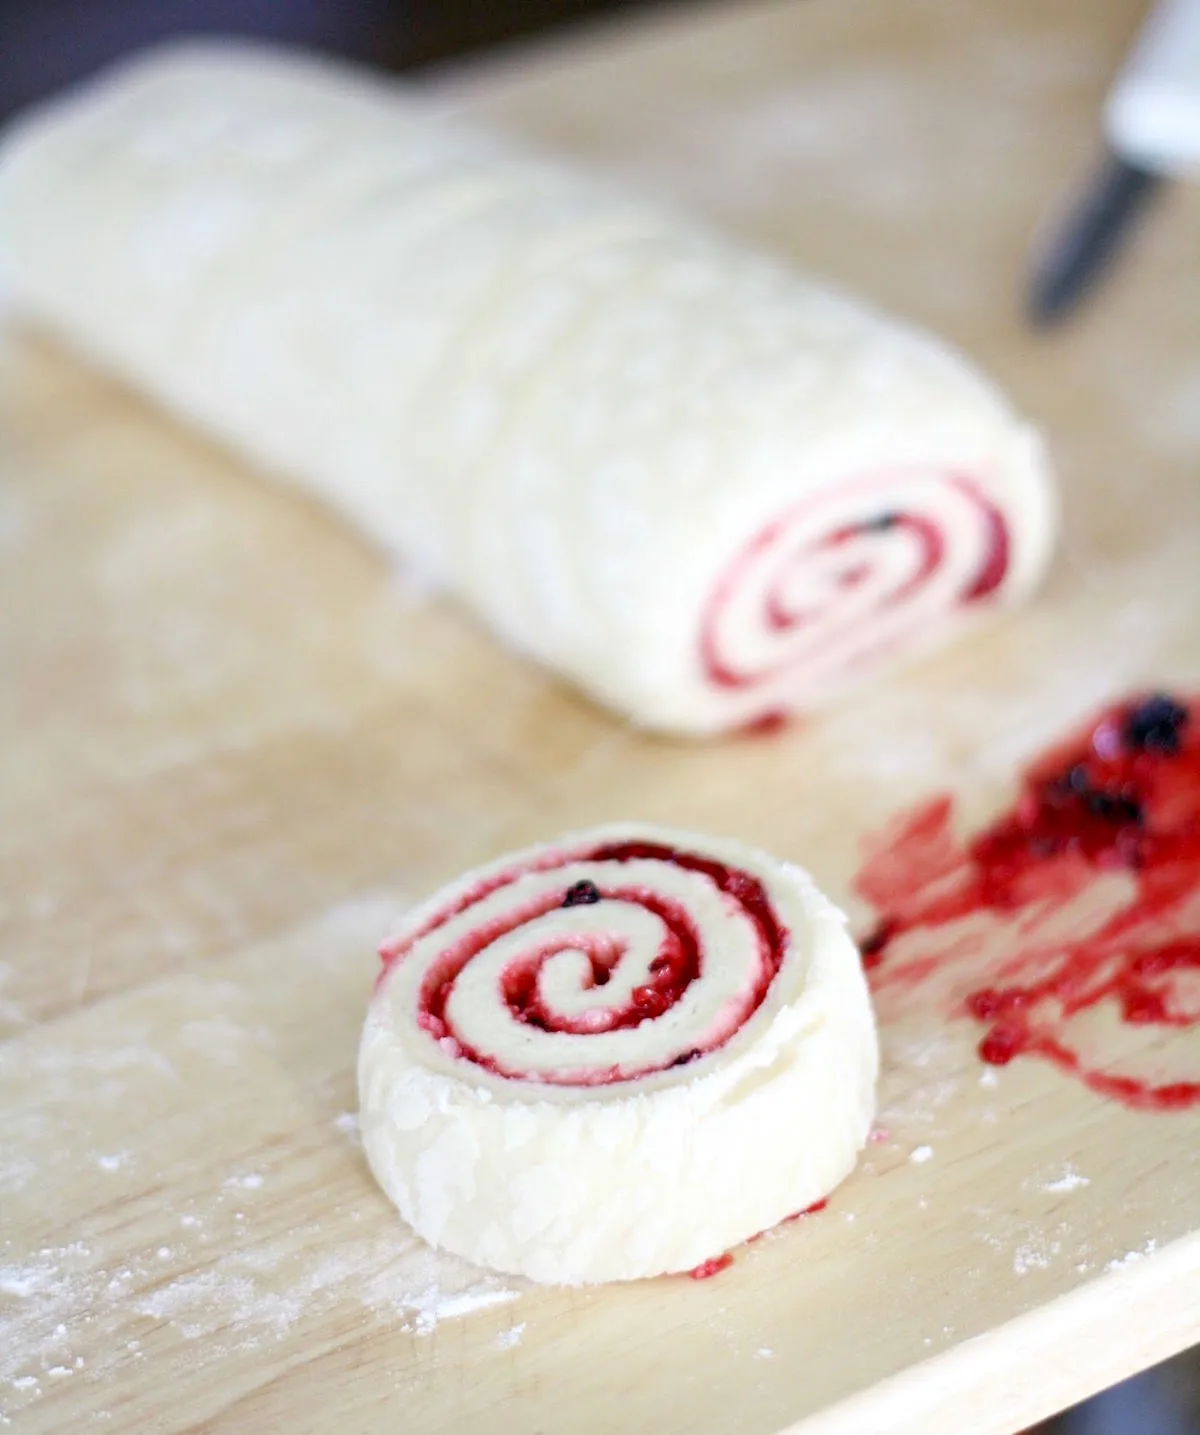 Cutting a roll off the dough log